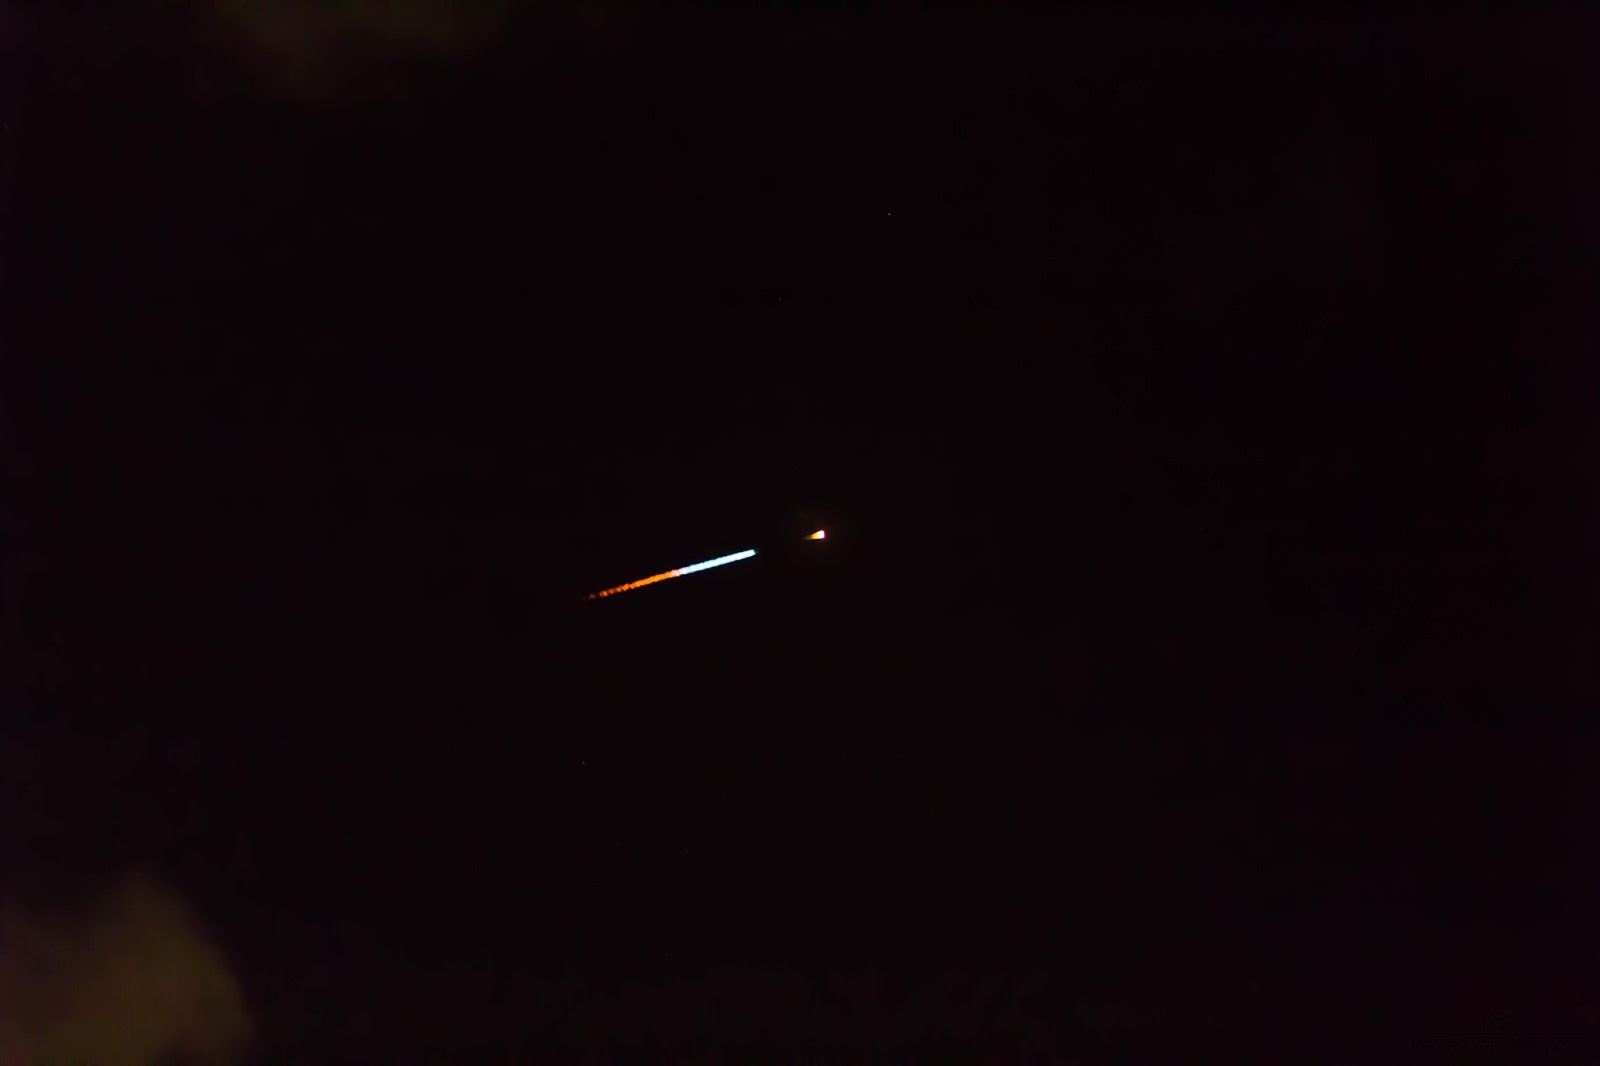 Image 3 - Meteor - Chennai, India, 16.October.2014 1.36 am IST